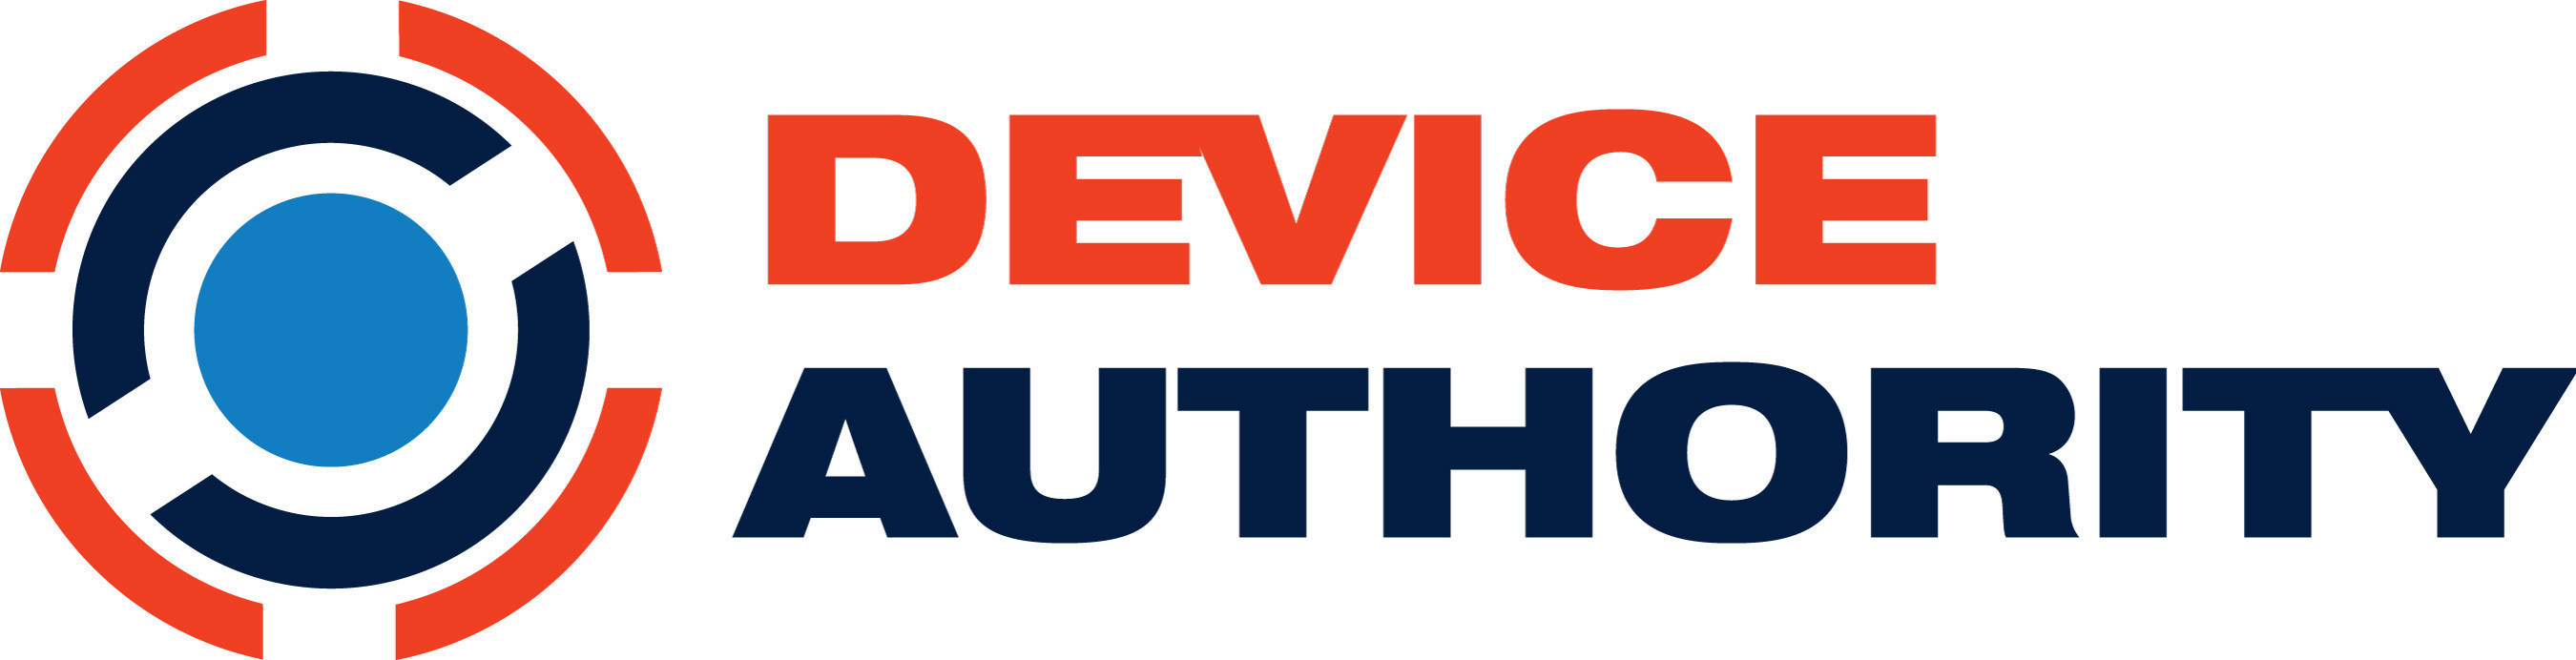 DeviceAuthority, Inc. logo